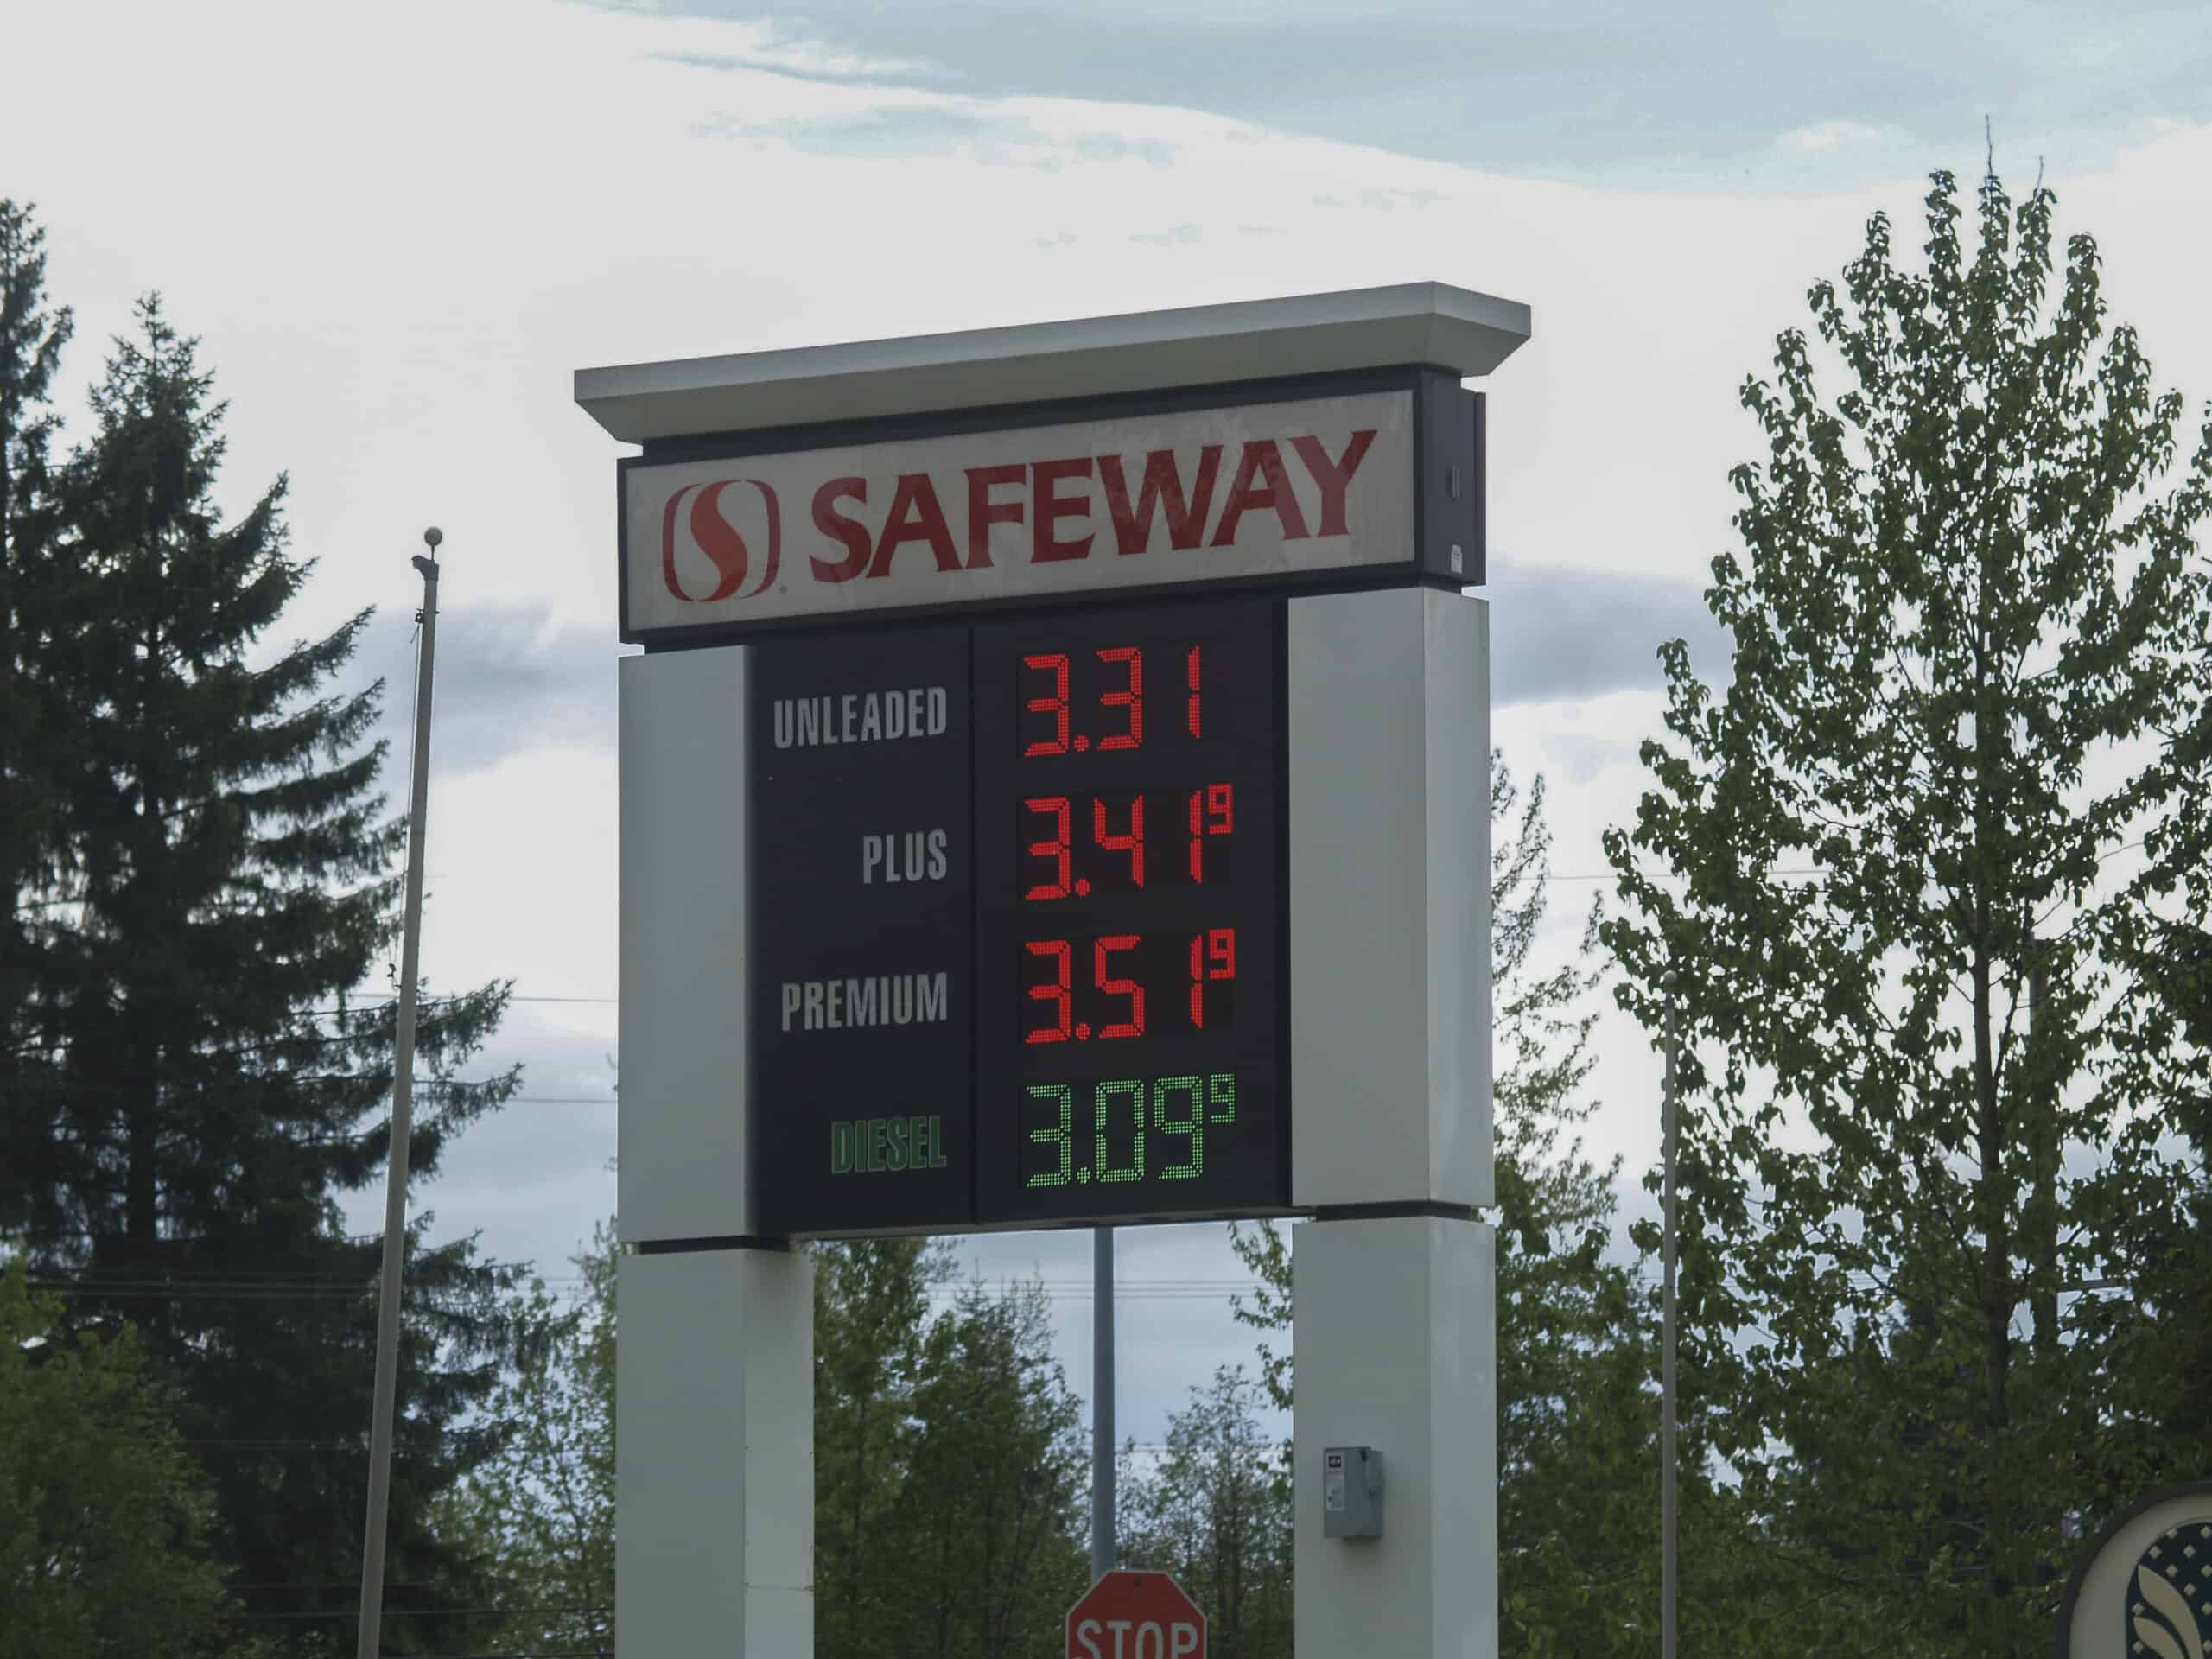 Safeway gas station sign by Gillfoto